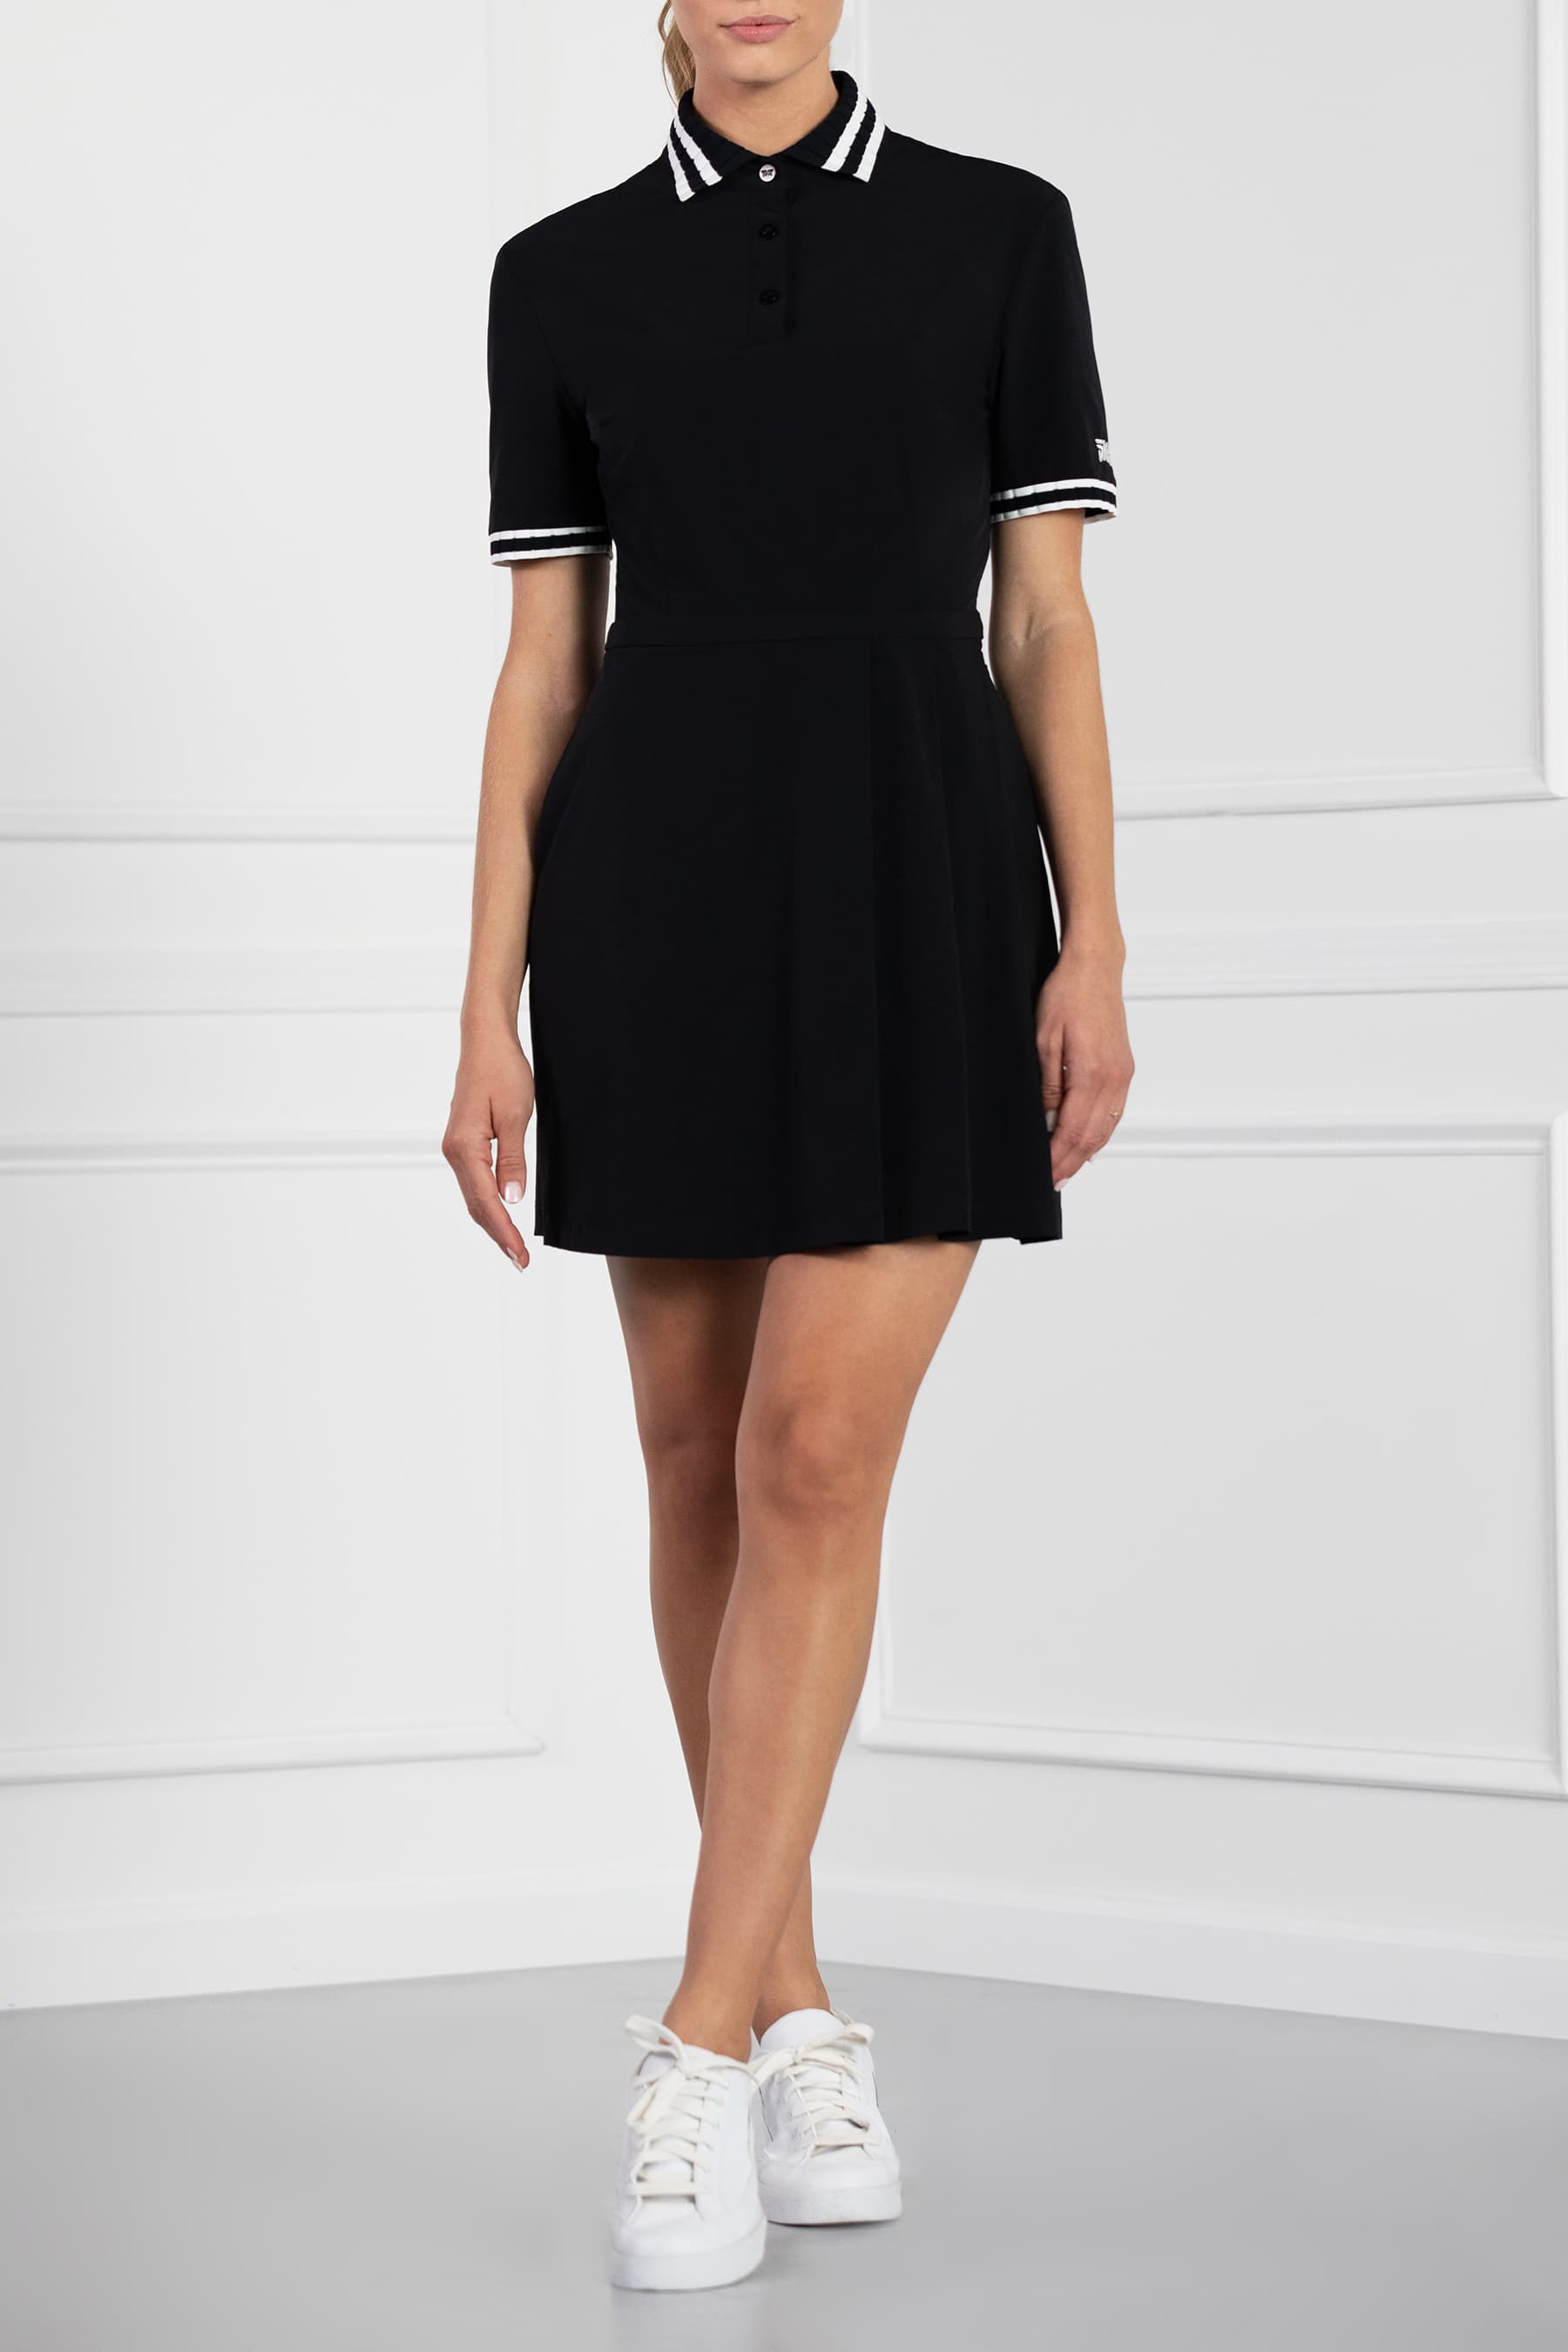 PXG Women's RP Signature Polo Dress in Black | Size Medium